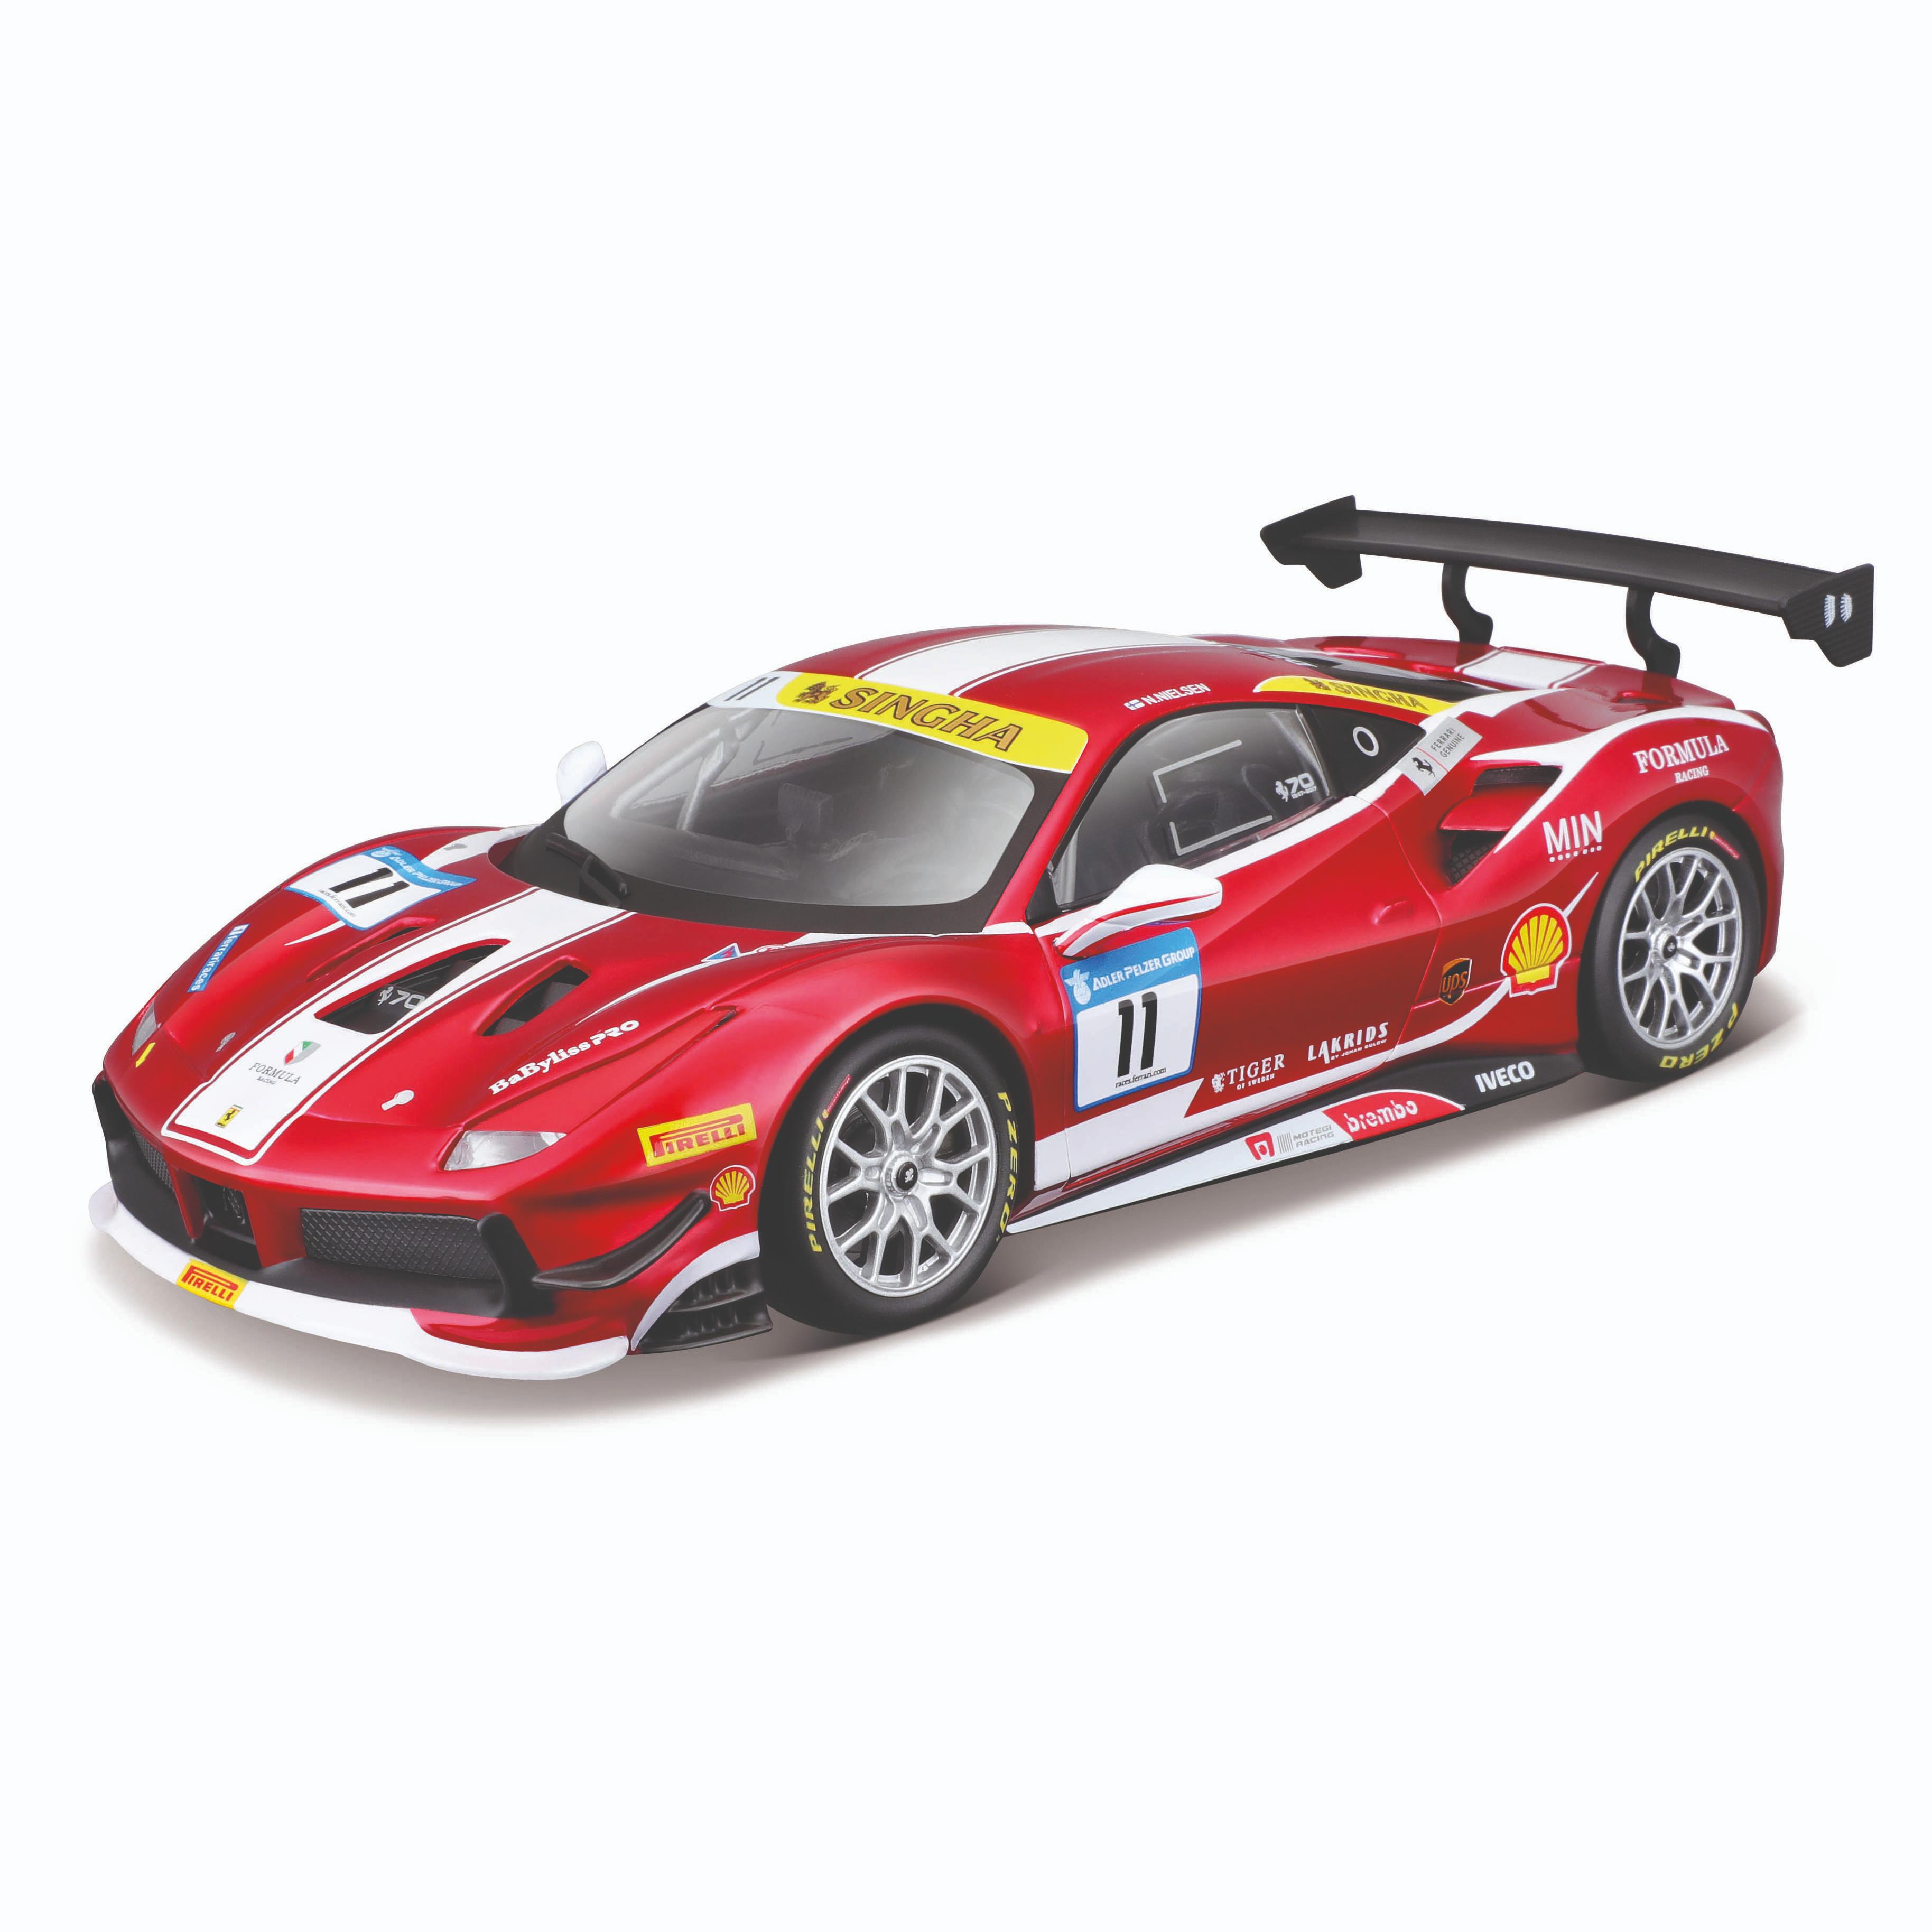 Коллекционная машинка Bburago Феррари 1:24 Ferrari Racing 488 Challenge,красная bburago 1 18 ferrari sf90 2019 season f1 racing model alloy car model collect gifts toy